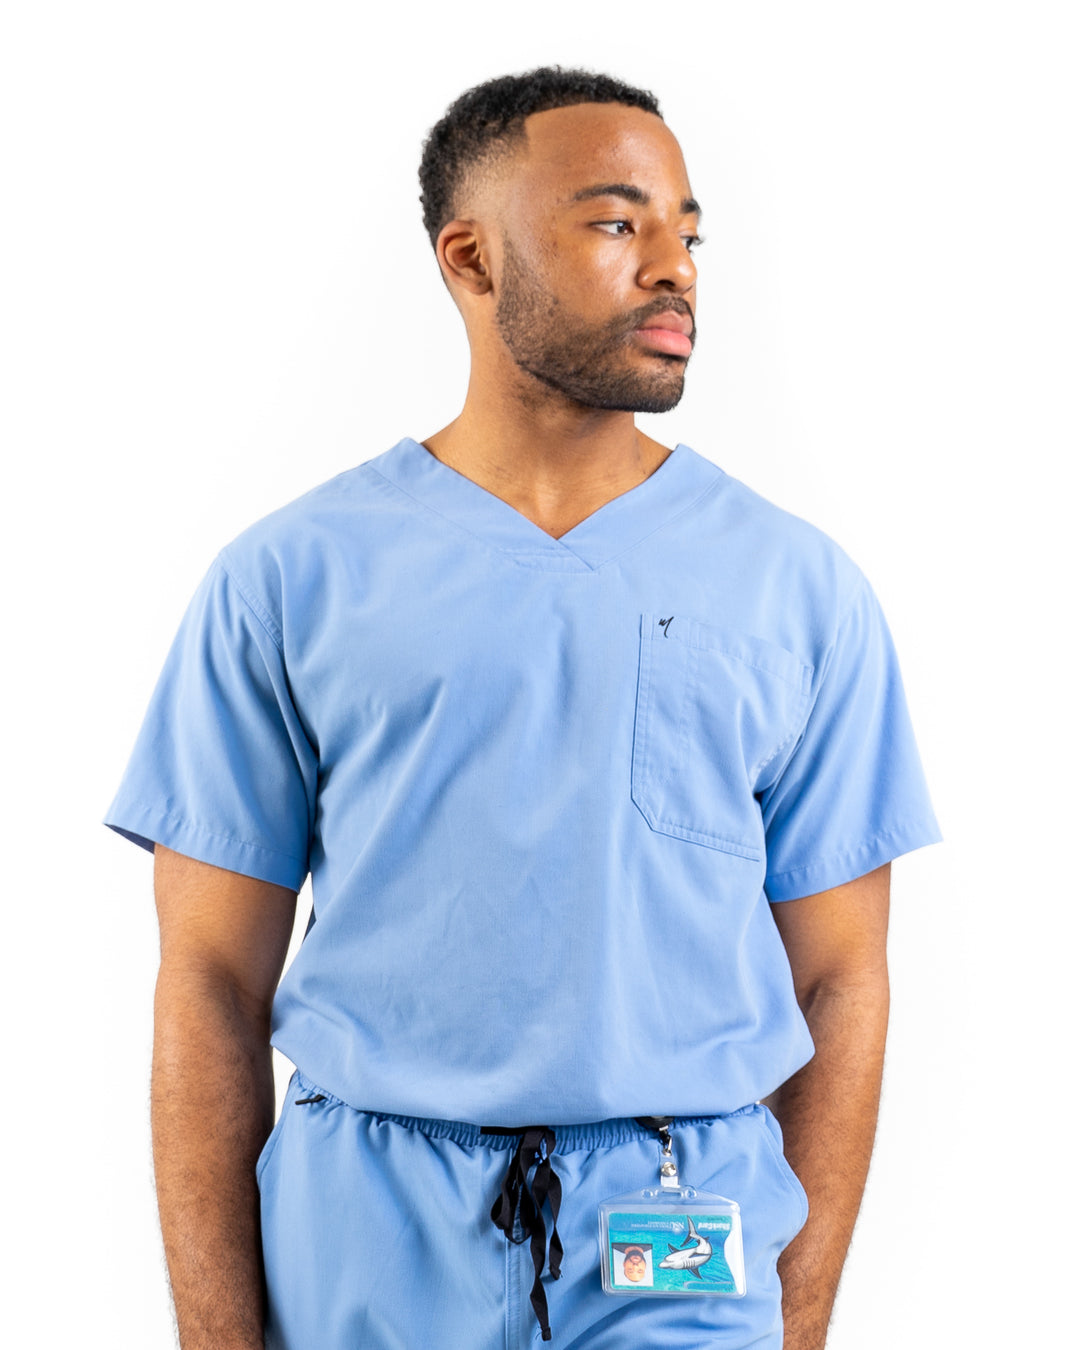 Men's Ceil Blue Scrub Top – Mim Scrubs - Millennials In Medicine